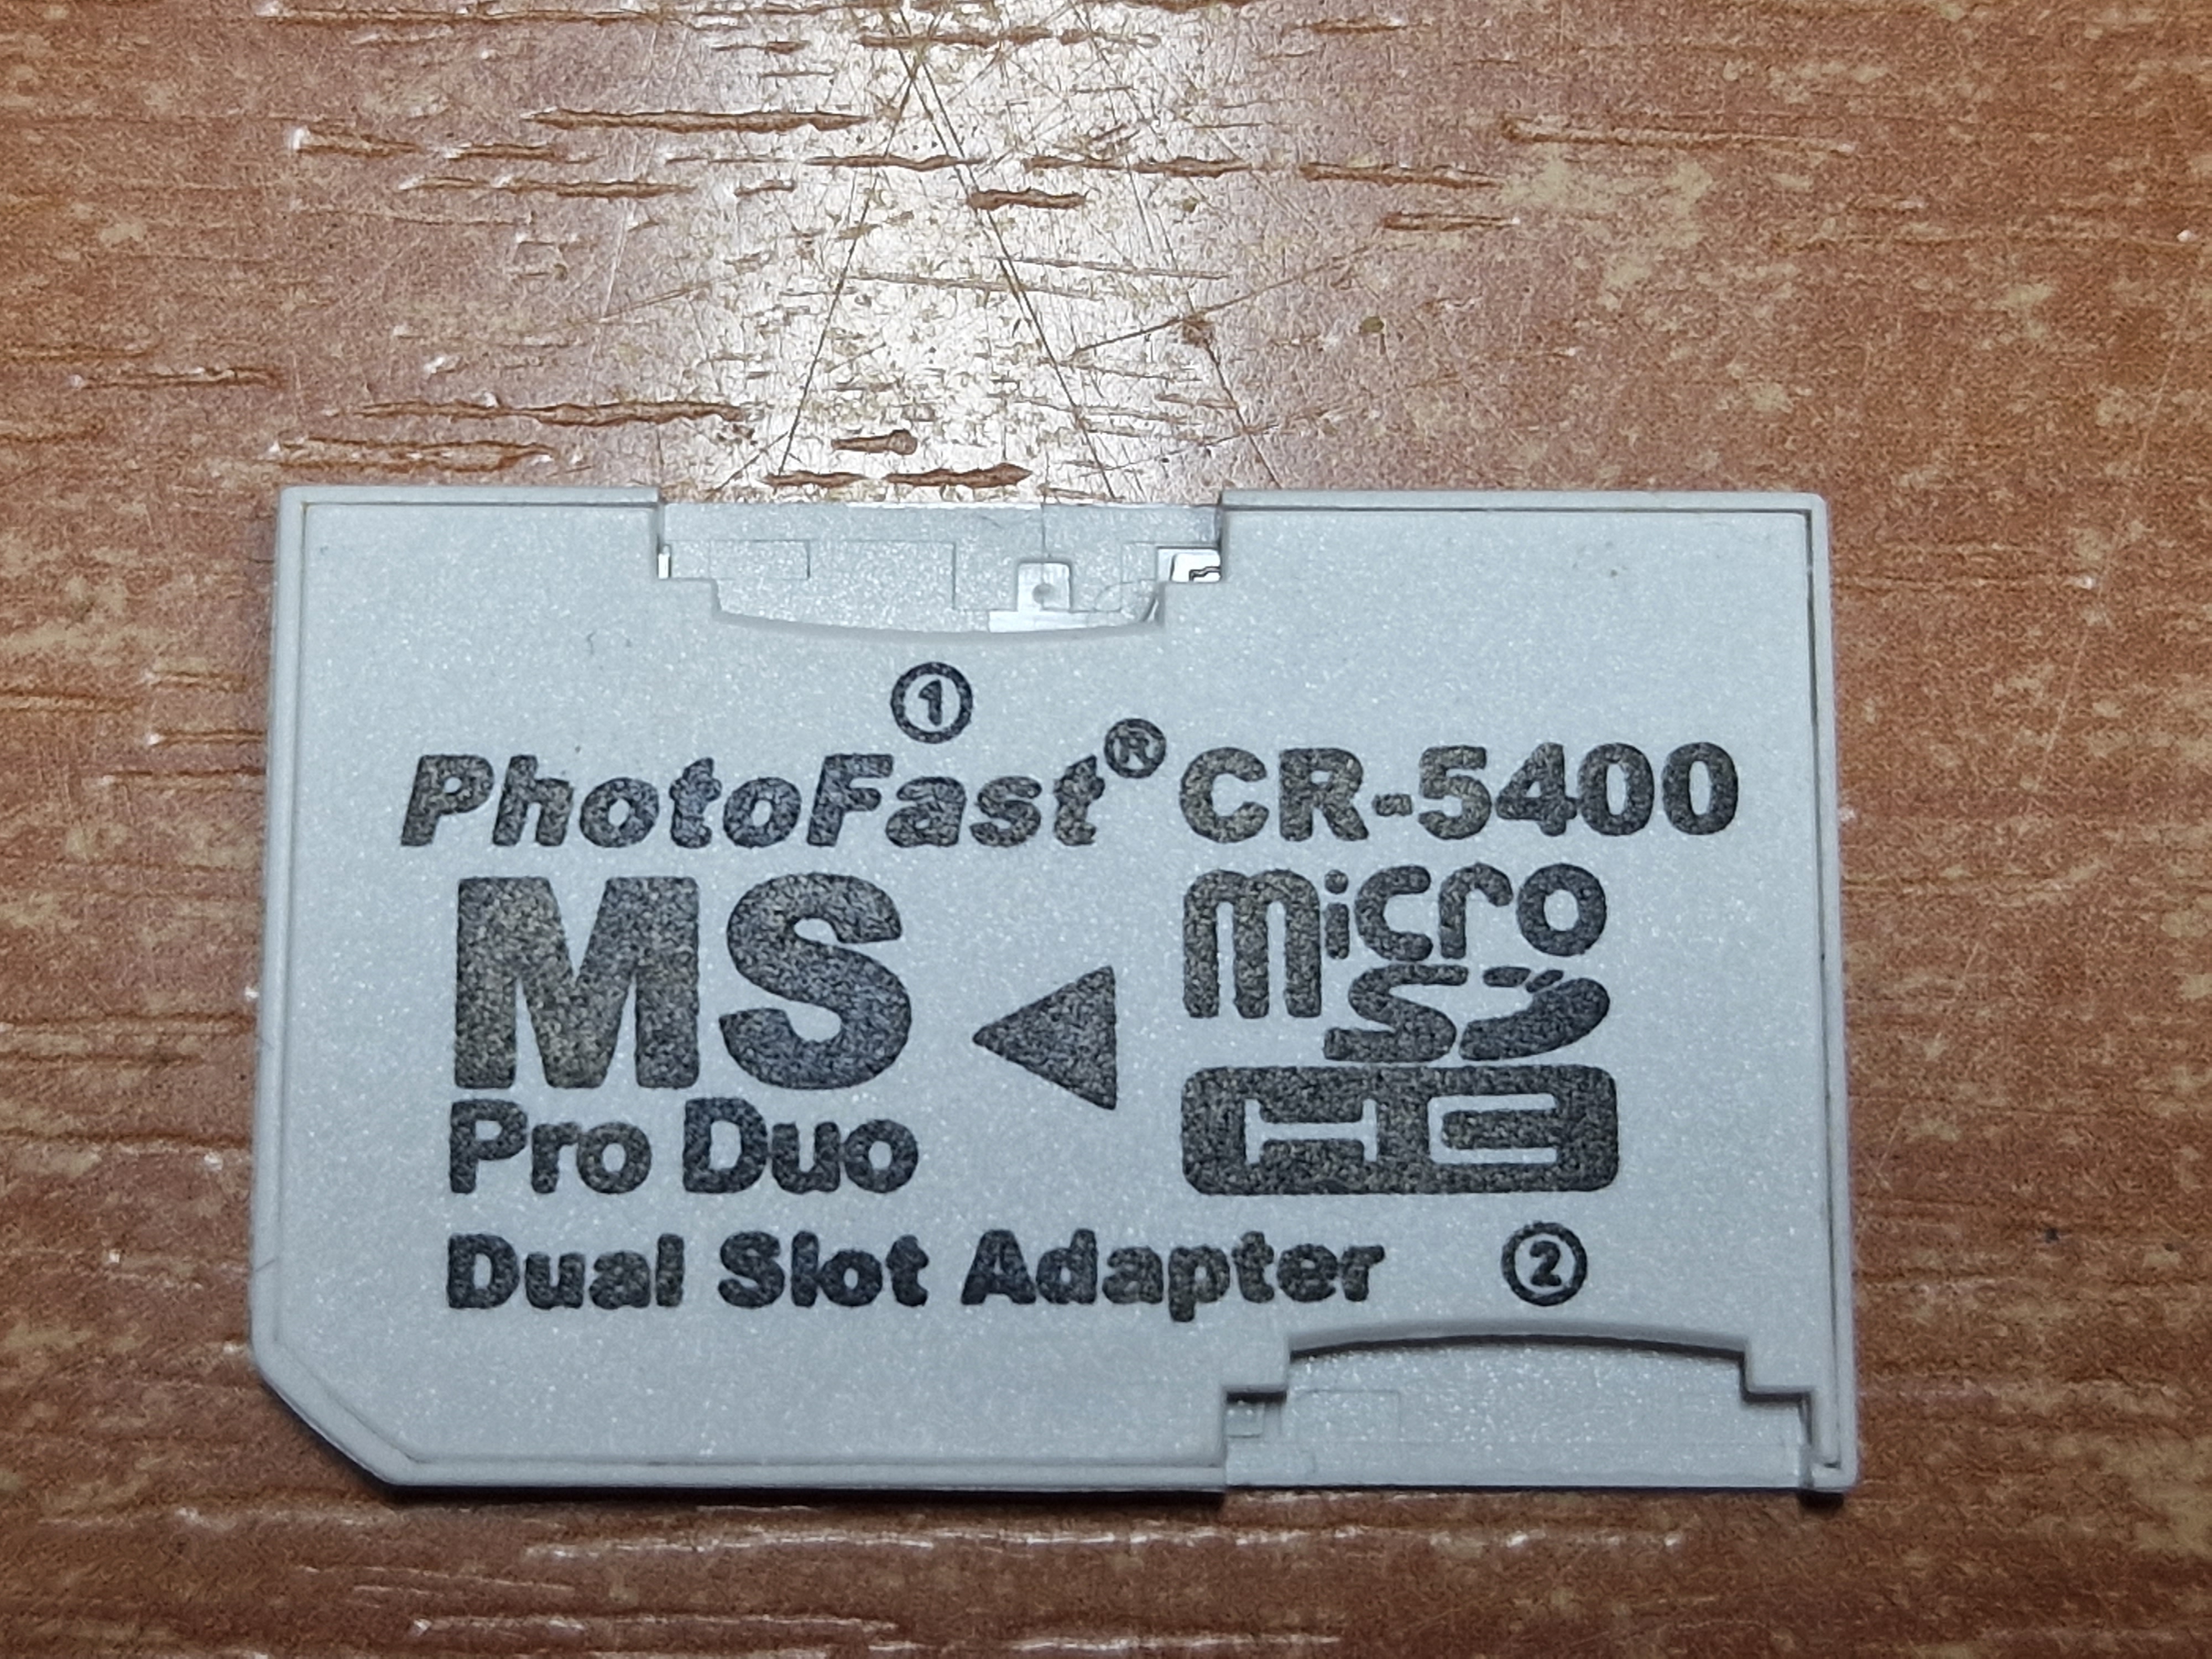 Adapter Memory Stick Pro Duo - MicroSD (PSP)